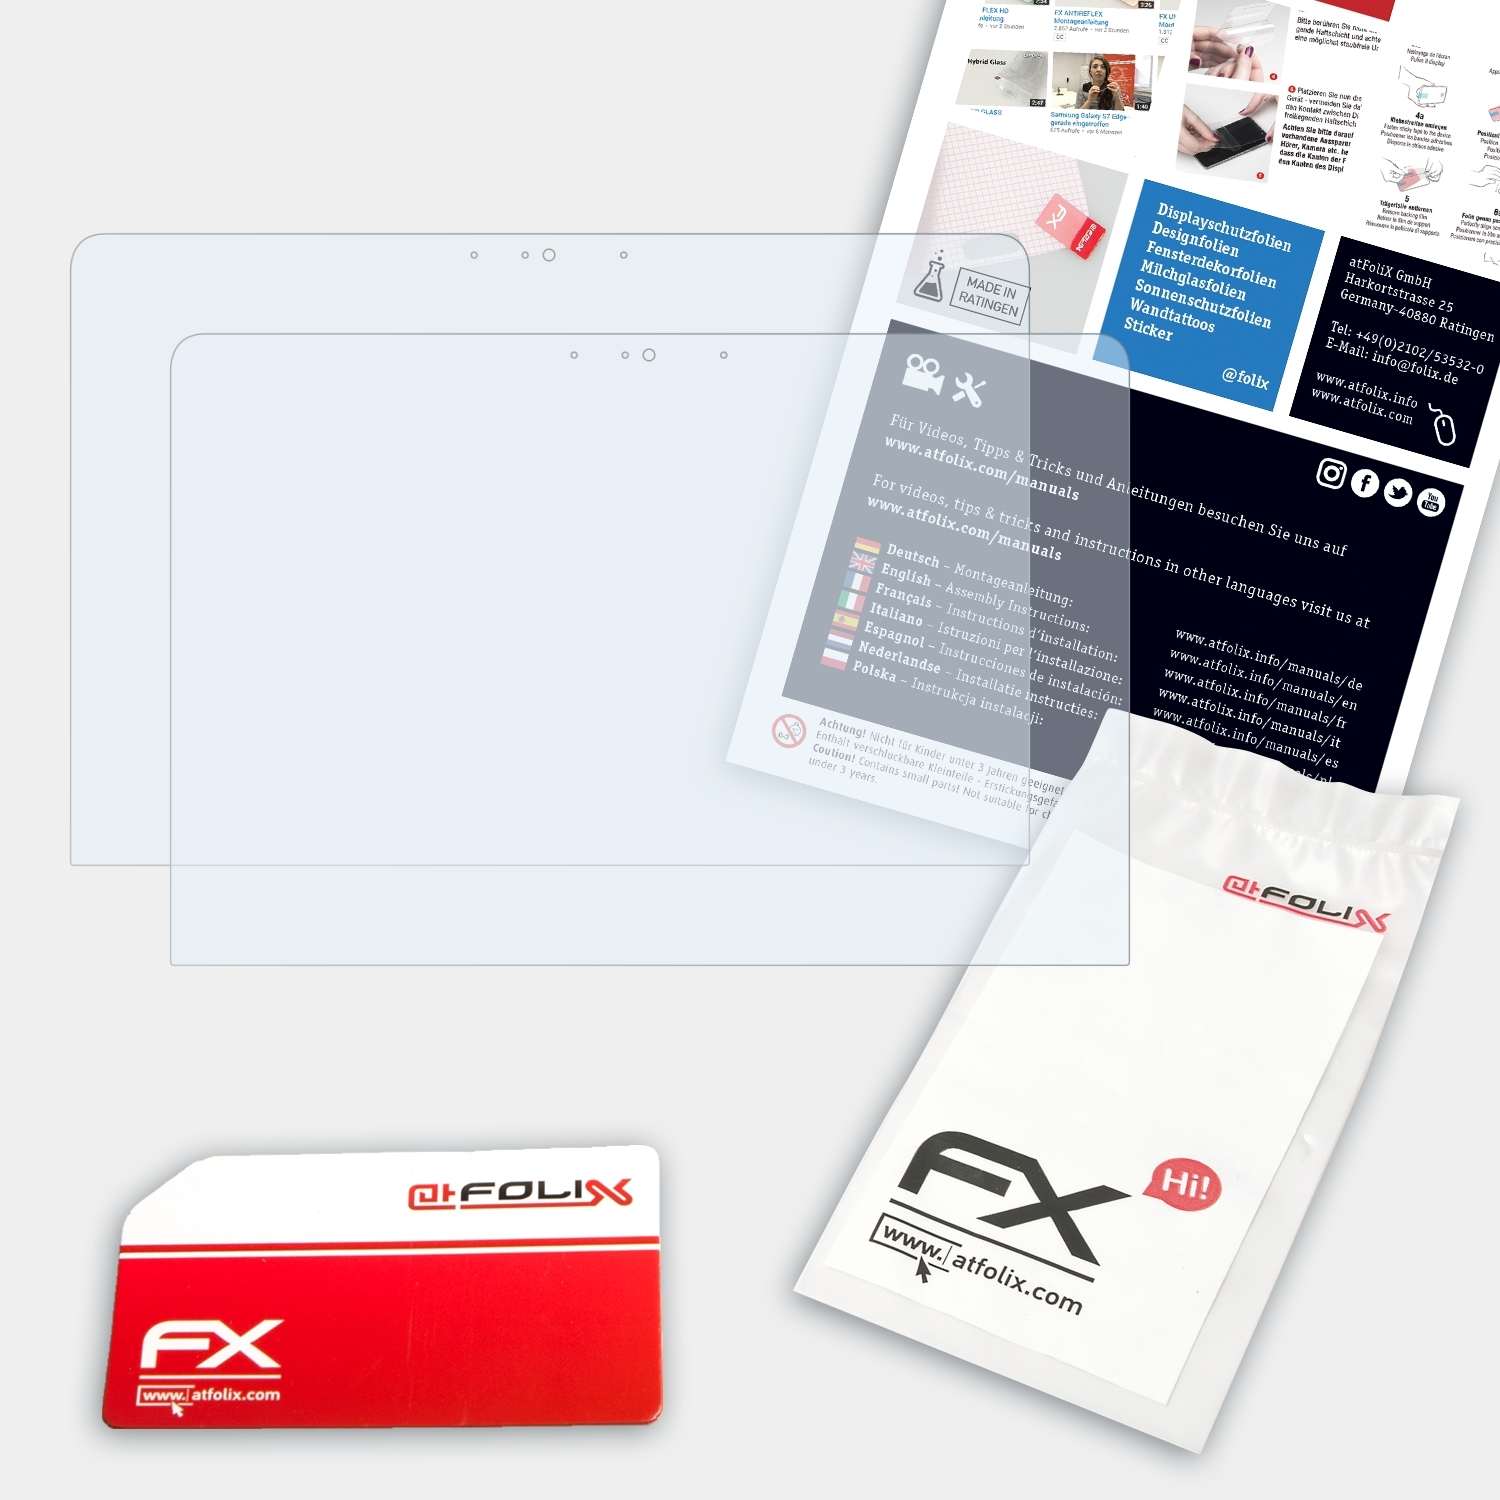 ATFOLIX 2x FX-Clear Displayschutz(für Asus 14 ZenBook Flip (UX461UN))